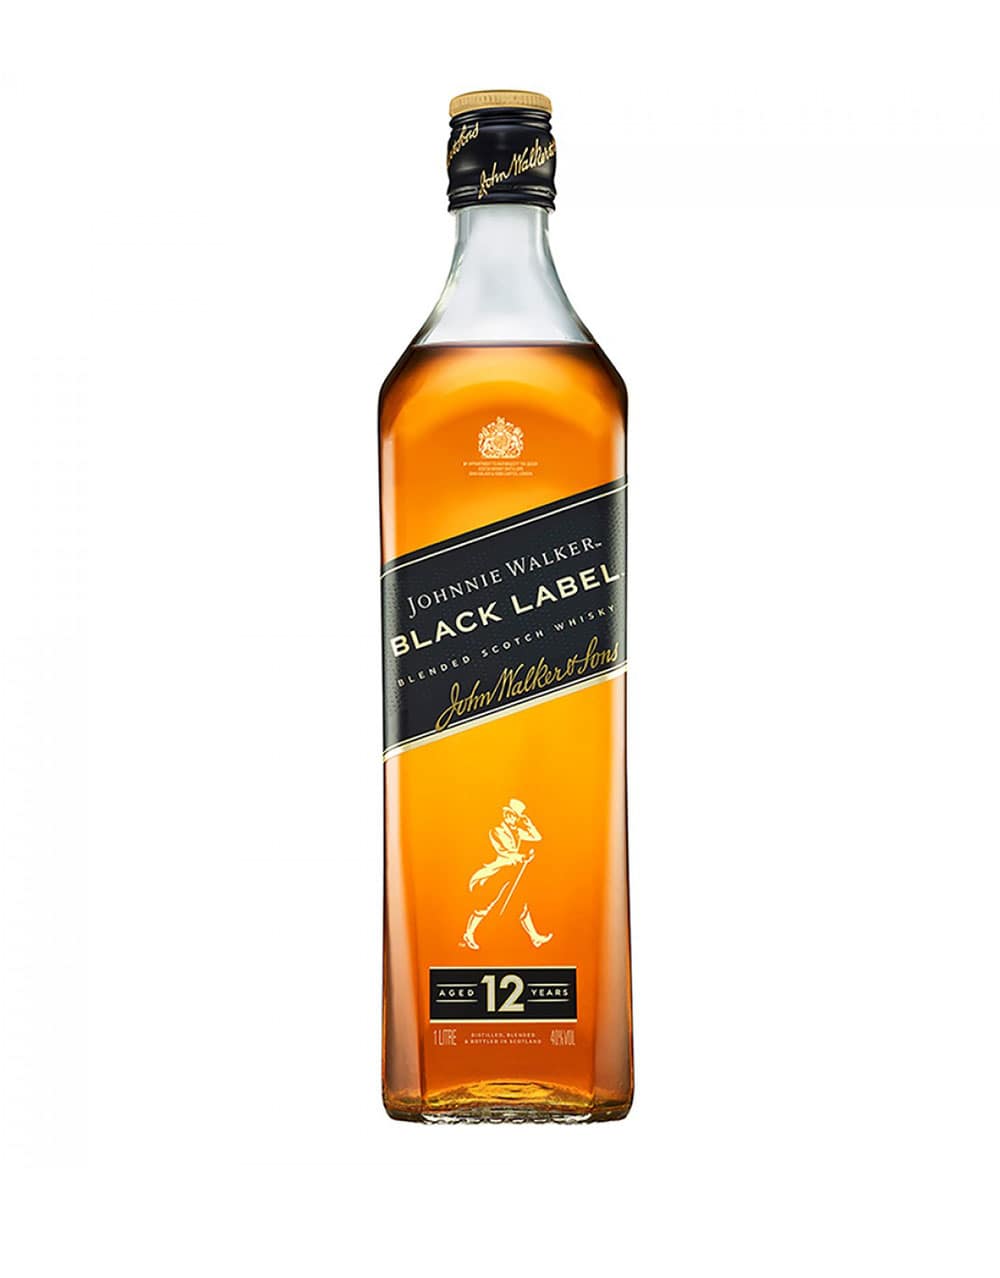 Johnnie Walker Black Label 12 years old 1.75L Scotch Whisky